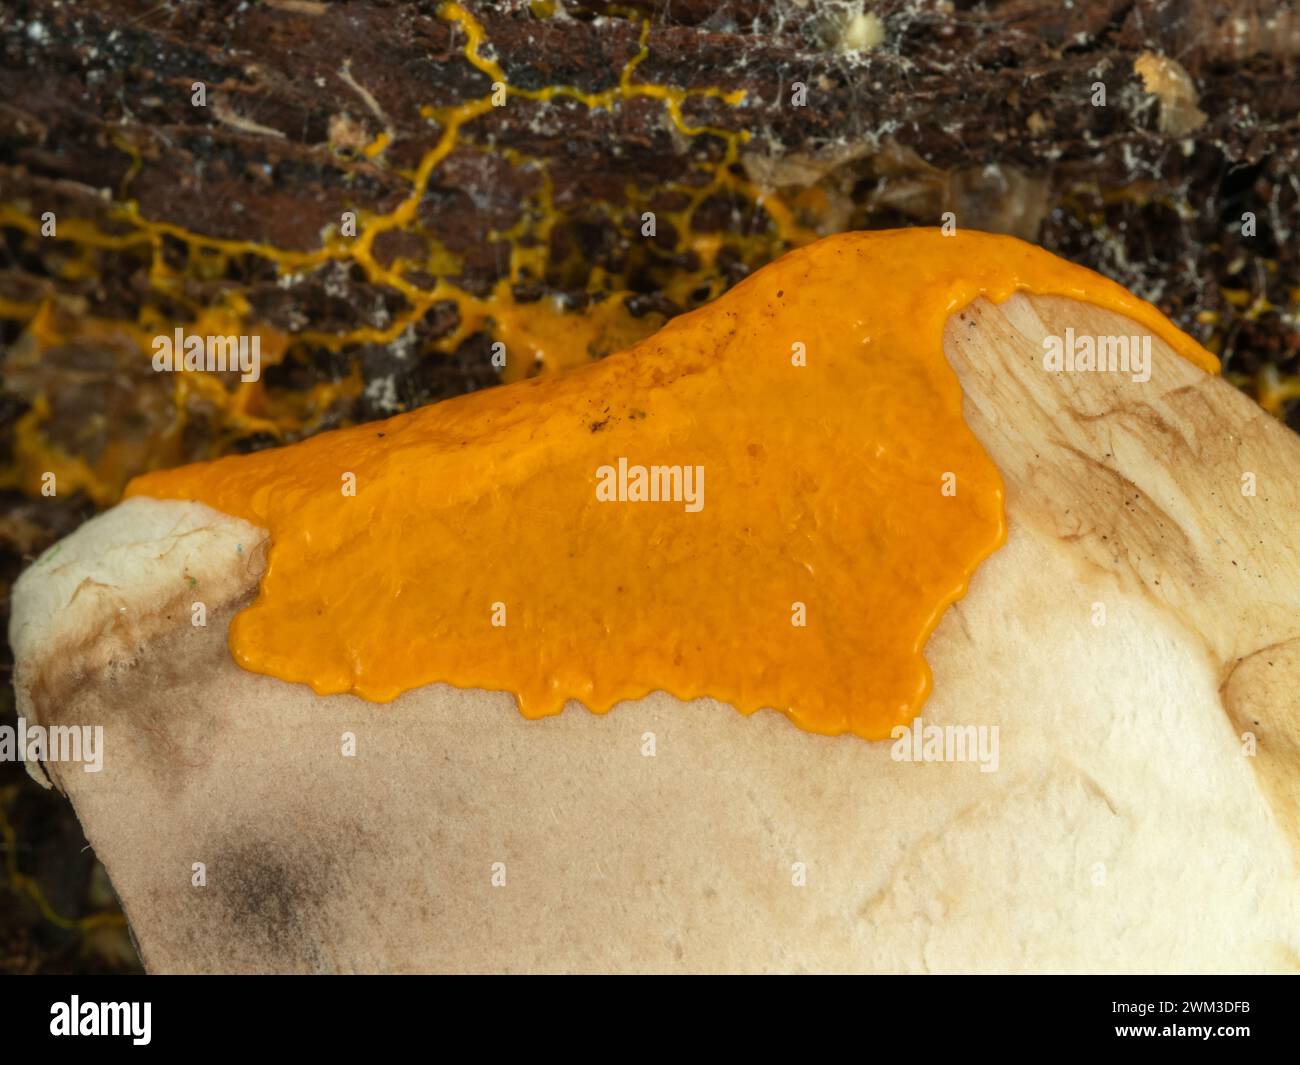 plasmodium of an orange slime mold (Badhamia utricularis) spreading across and feeding on a piece of mushroom Stock Photo